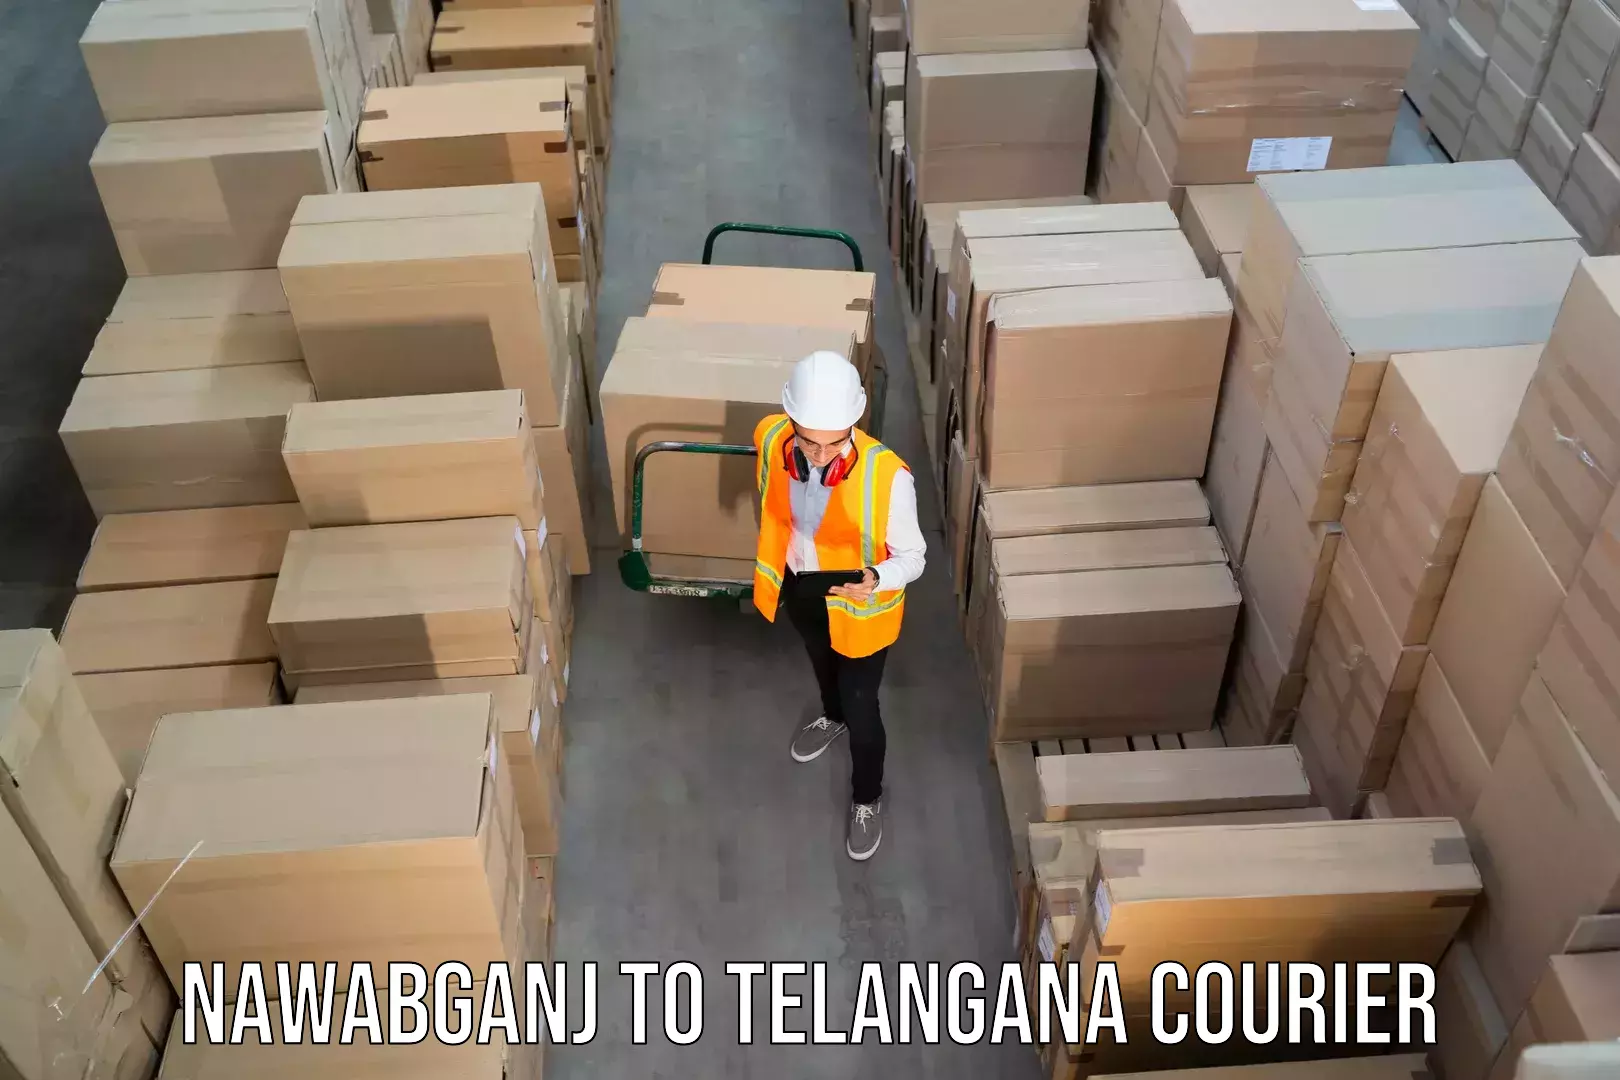 International parcel service Nawabganj to Manneguda